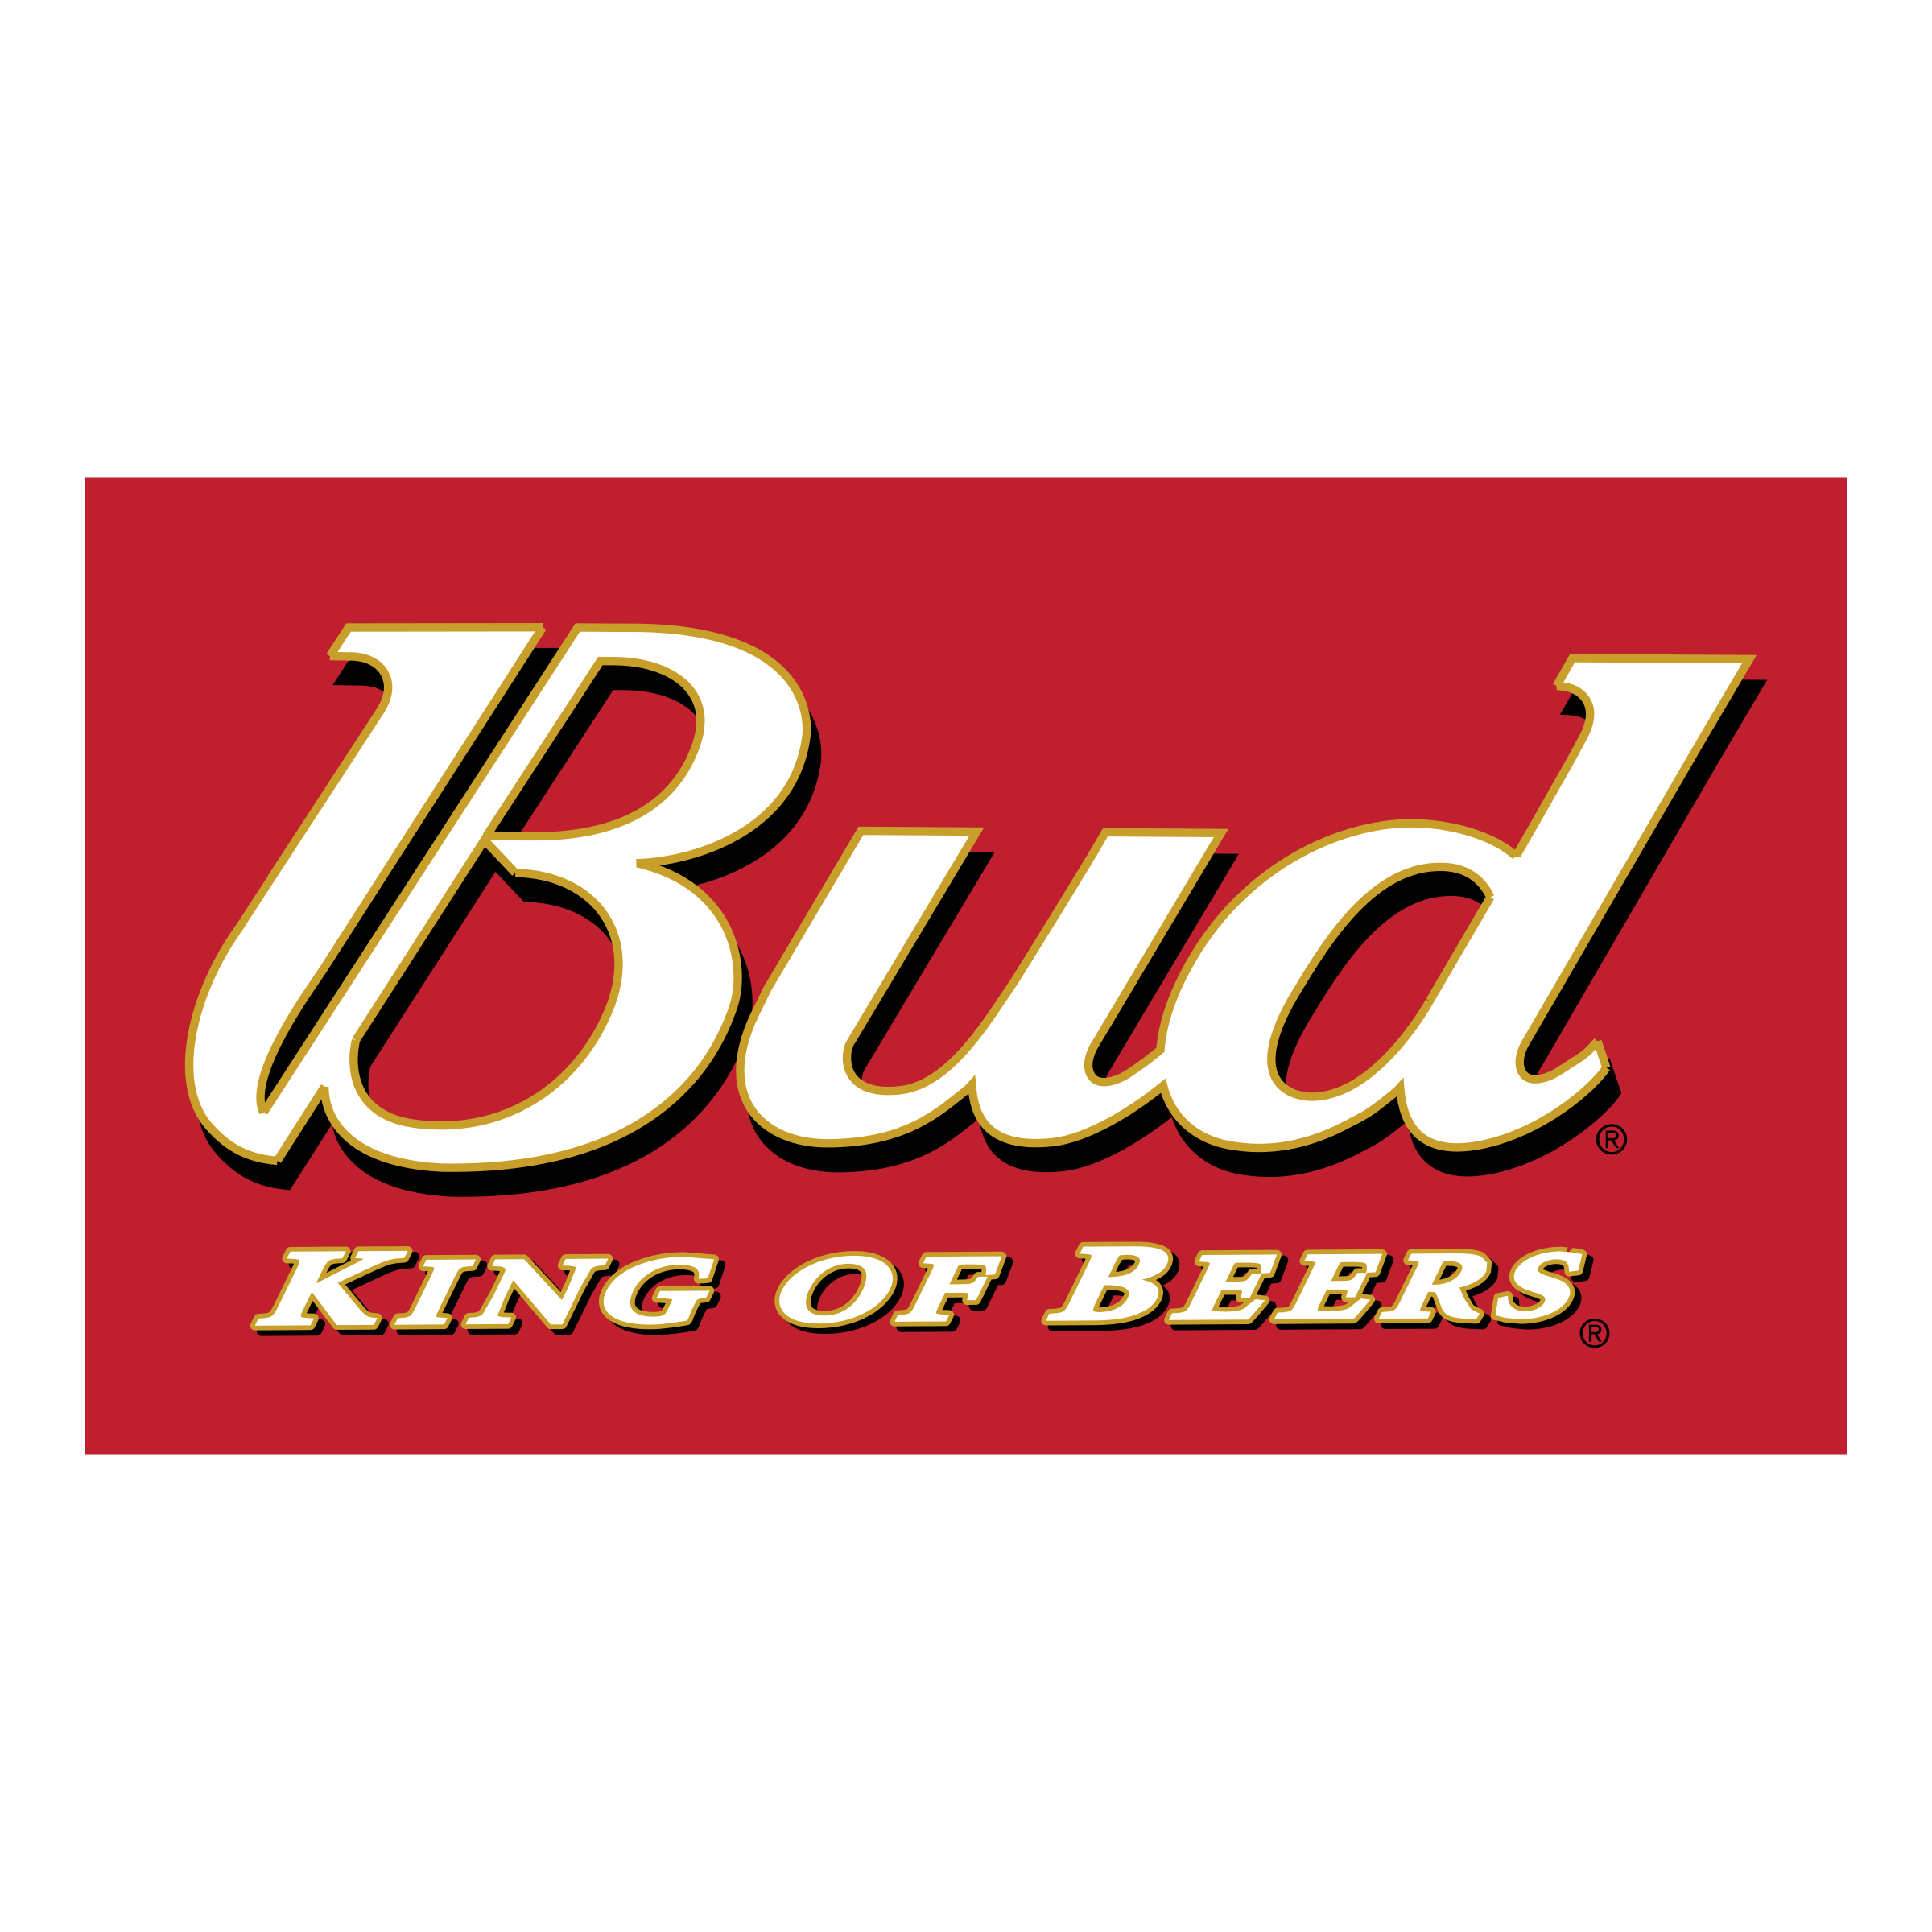 Bud Logo - Bud Logo PNG Transparent & SVG Vector - Freebie Supply